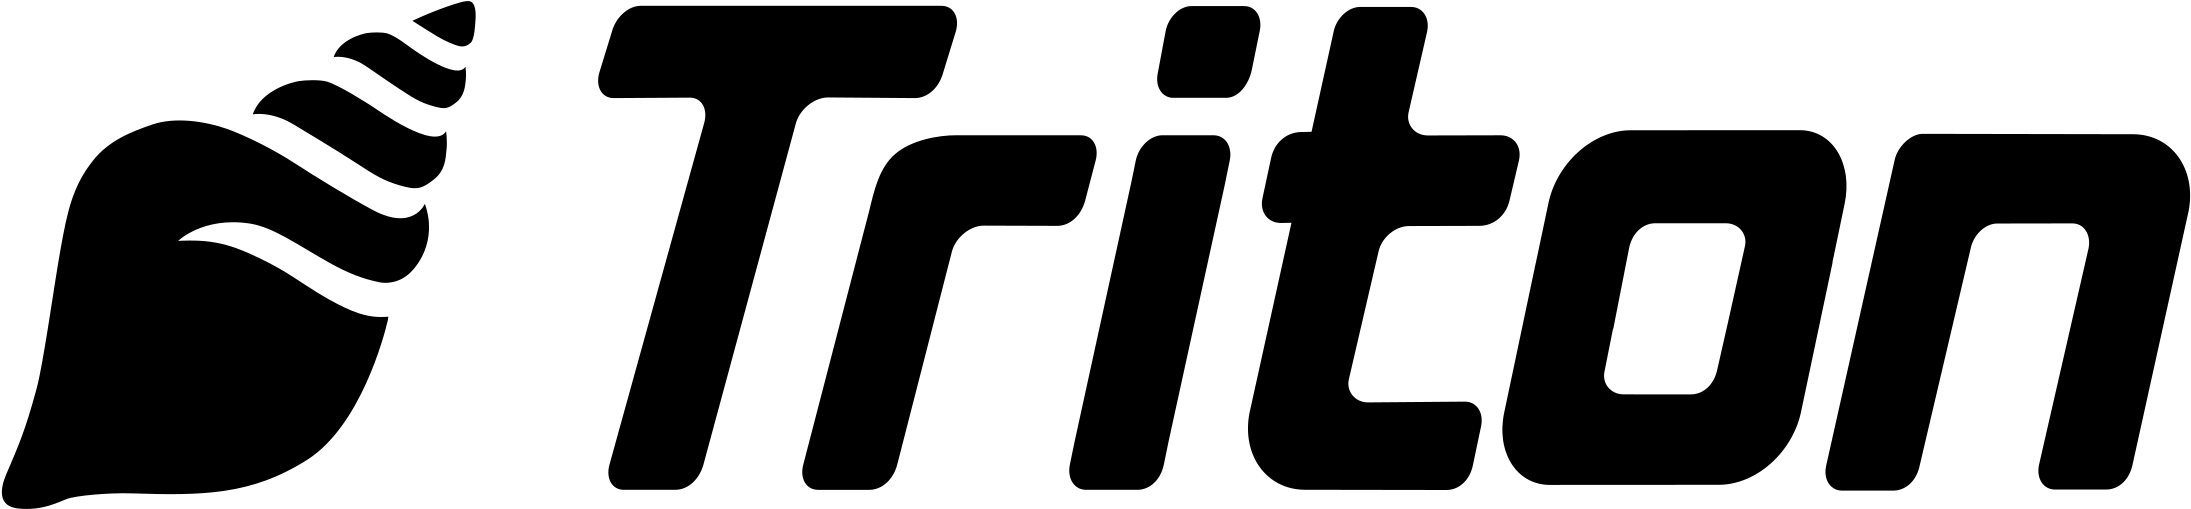 Triton Logo Png Transparent - Triton Atm Logo (2400x2400), Png Download